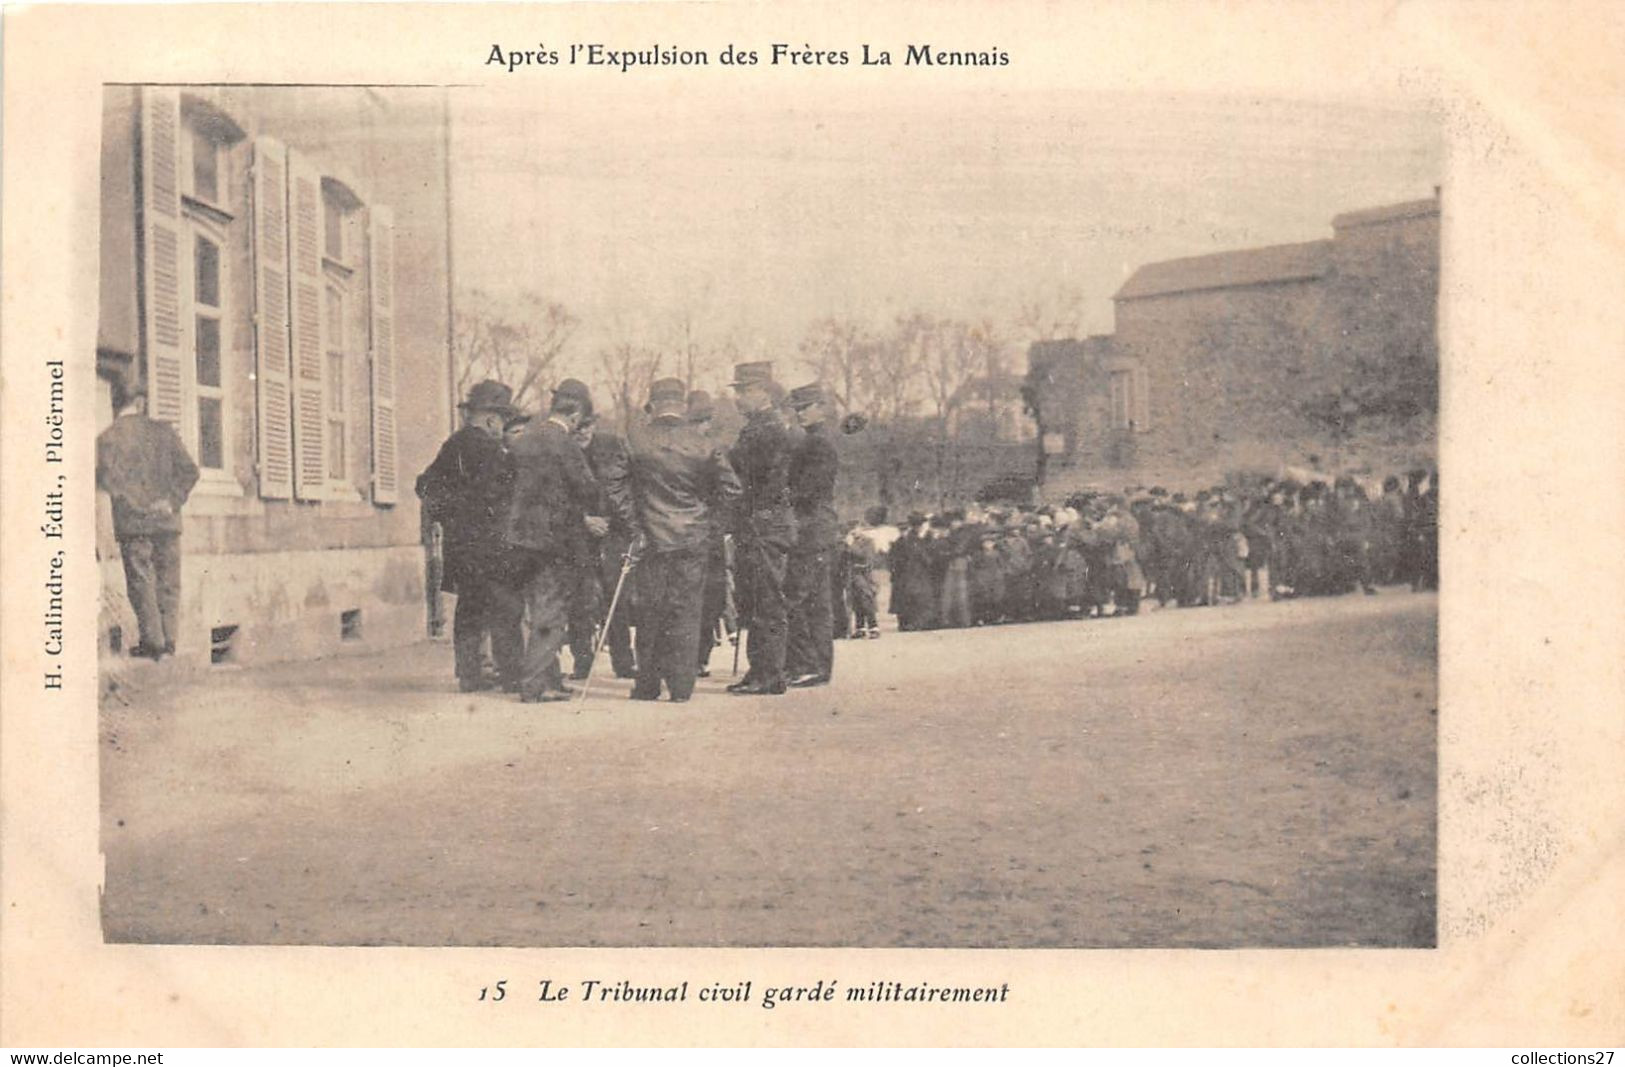 56-PLOERMEL- LOT DE 13 CARTES- LES EXPULSIONS DES FRERES DE PLOERMEL- LE 12 /13 FEVRIER 1904